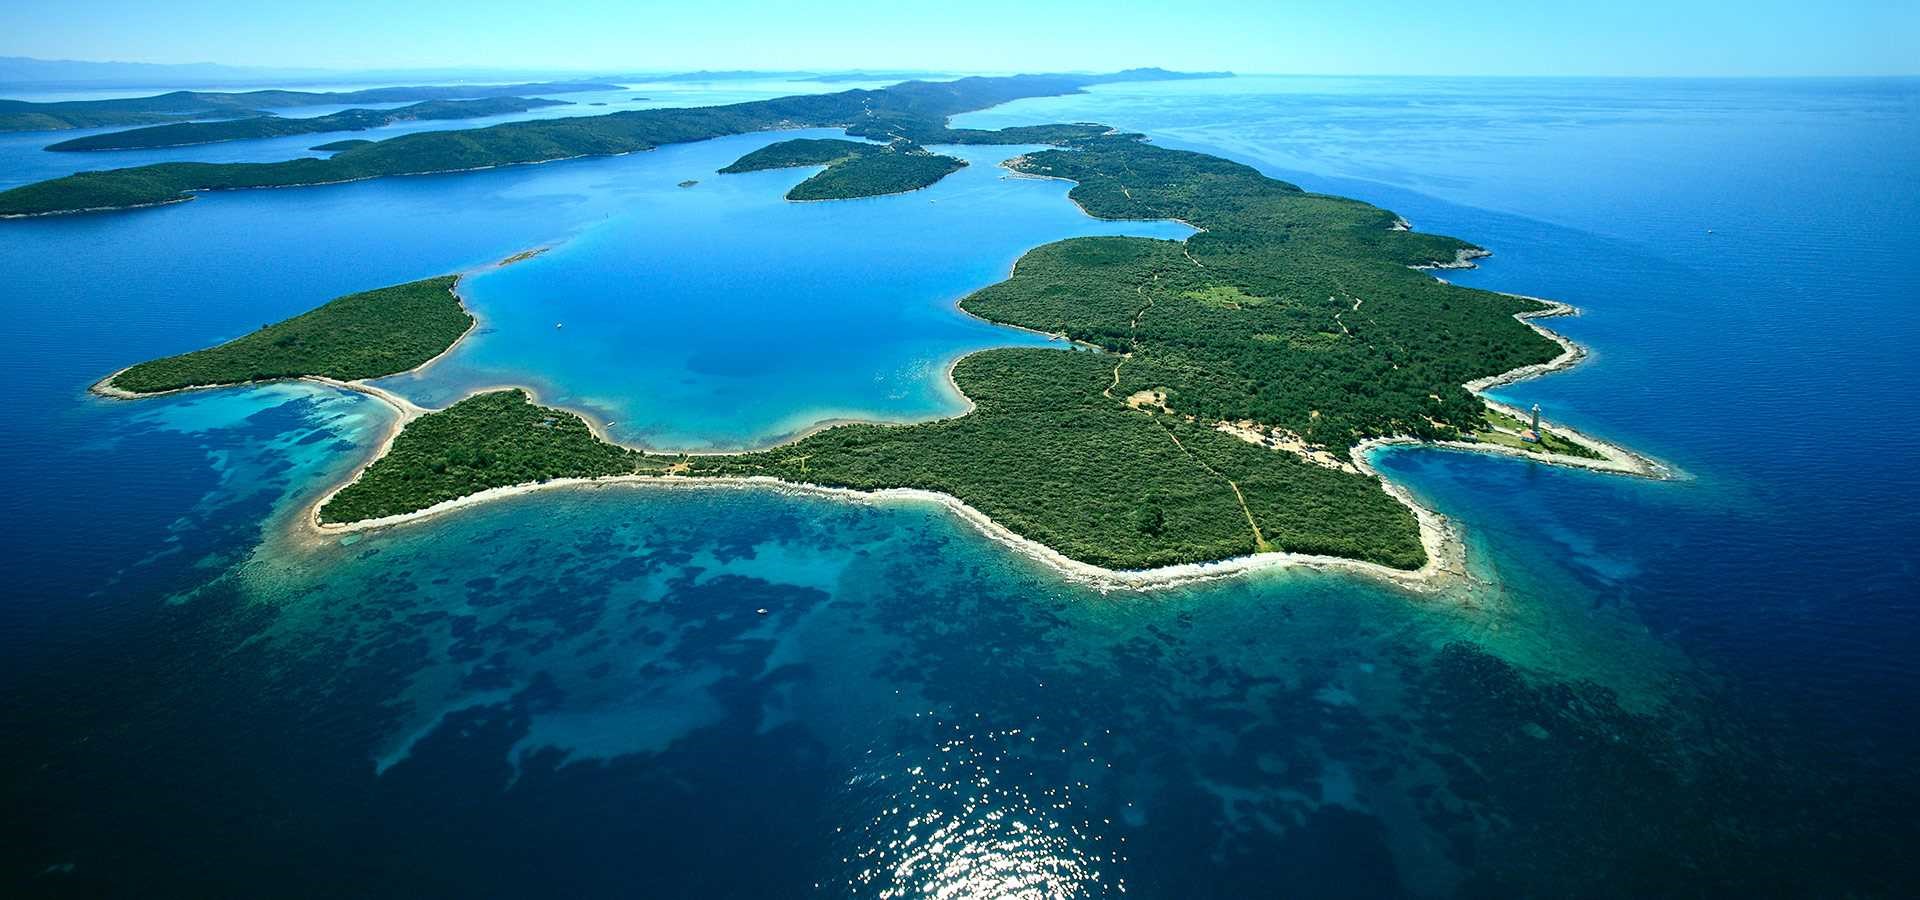 Zadar Dalmatia region - Croatian tourist destination and events